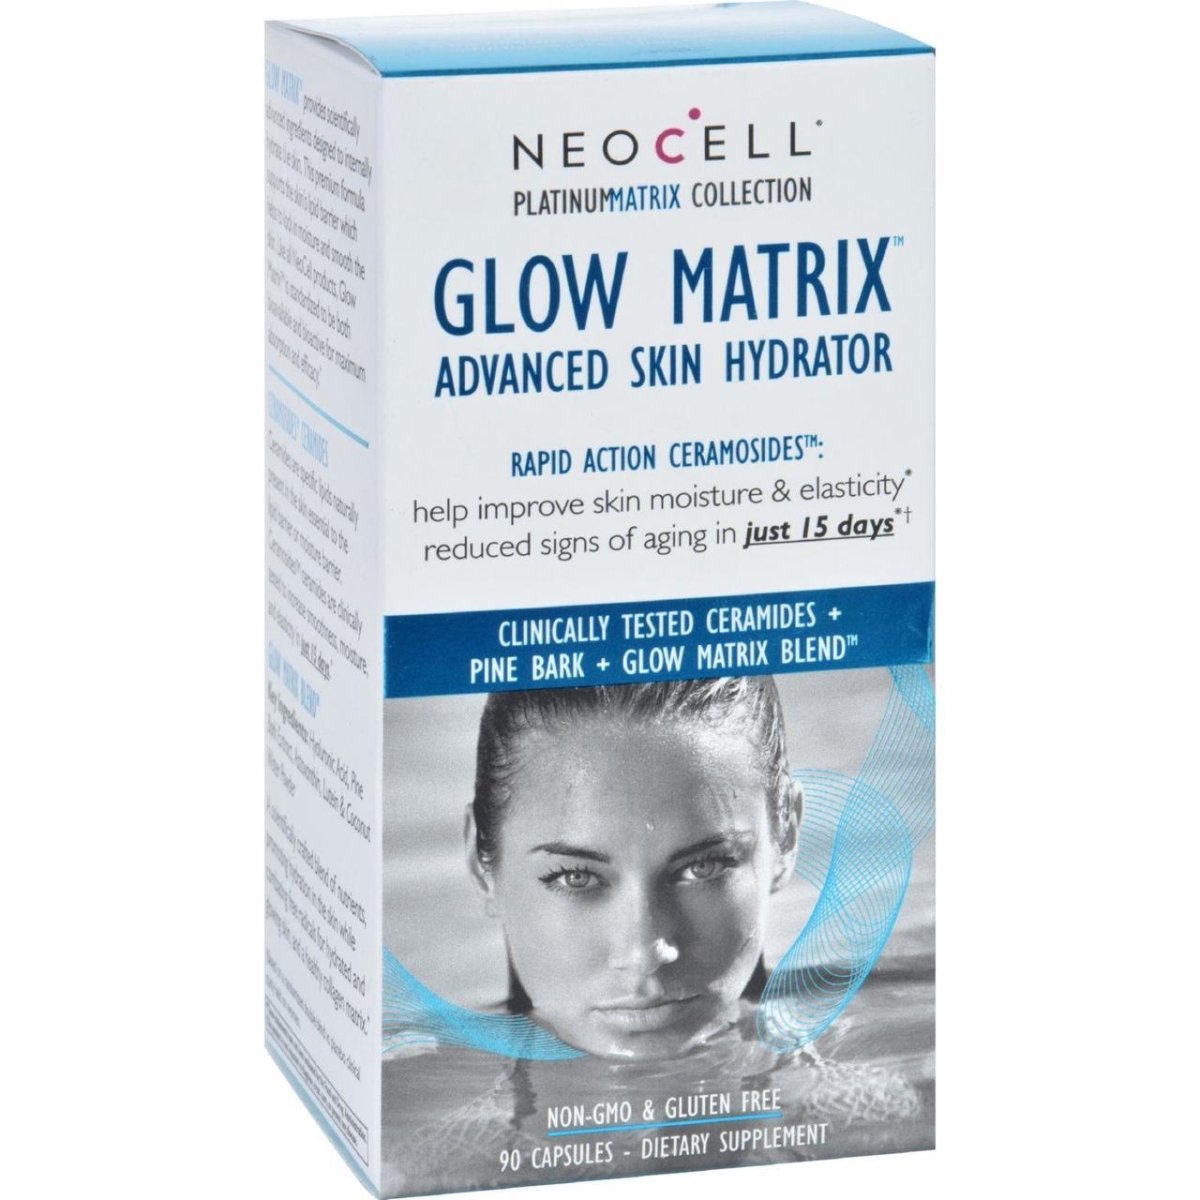 Hg1724921 Advanced Skin Hydrator Glow Matrix, Platinum Matrix - 90 Capsules